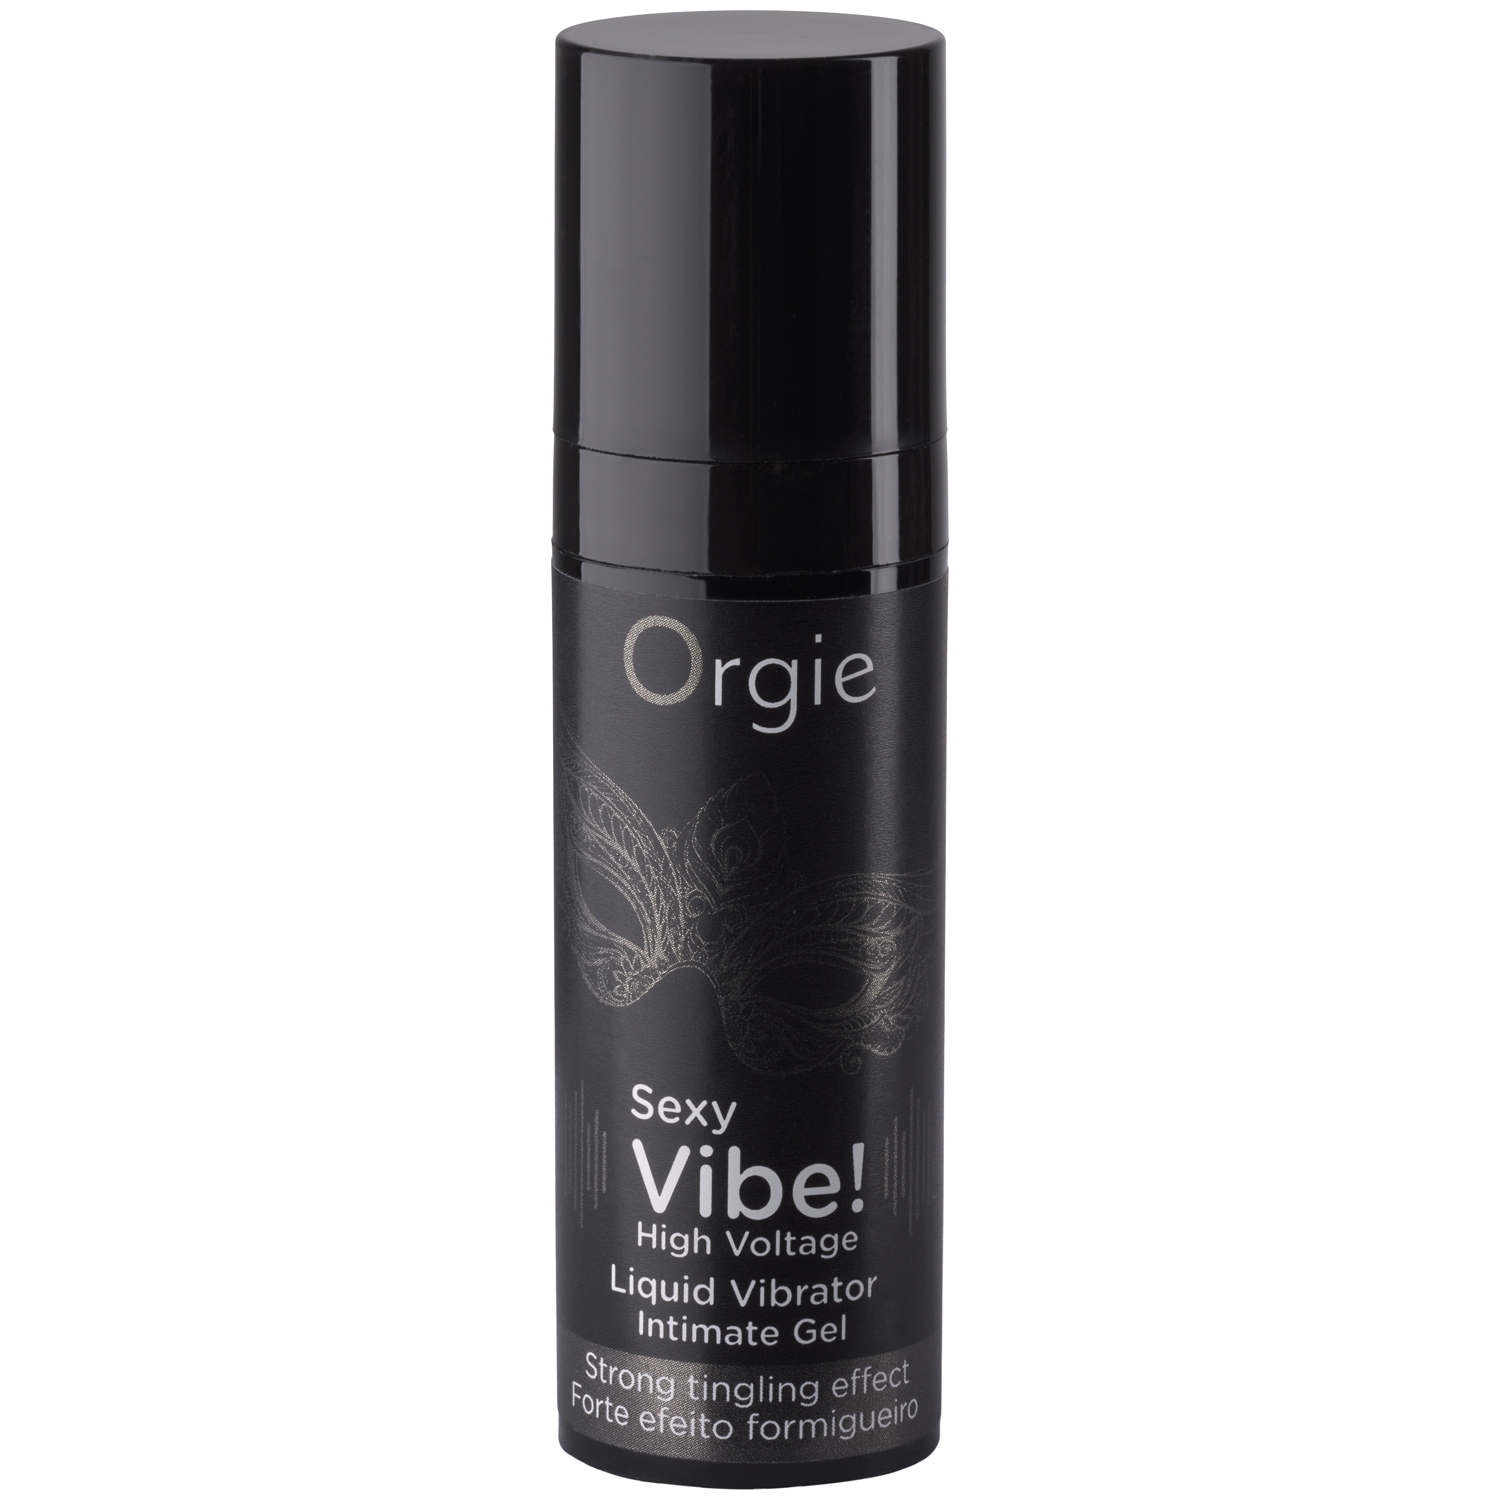 Orgie Sexy Vibe! High Voltage Liquid Vibrator Intimgel 15 ml - Black